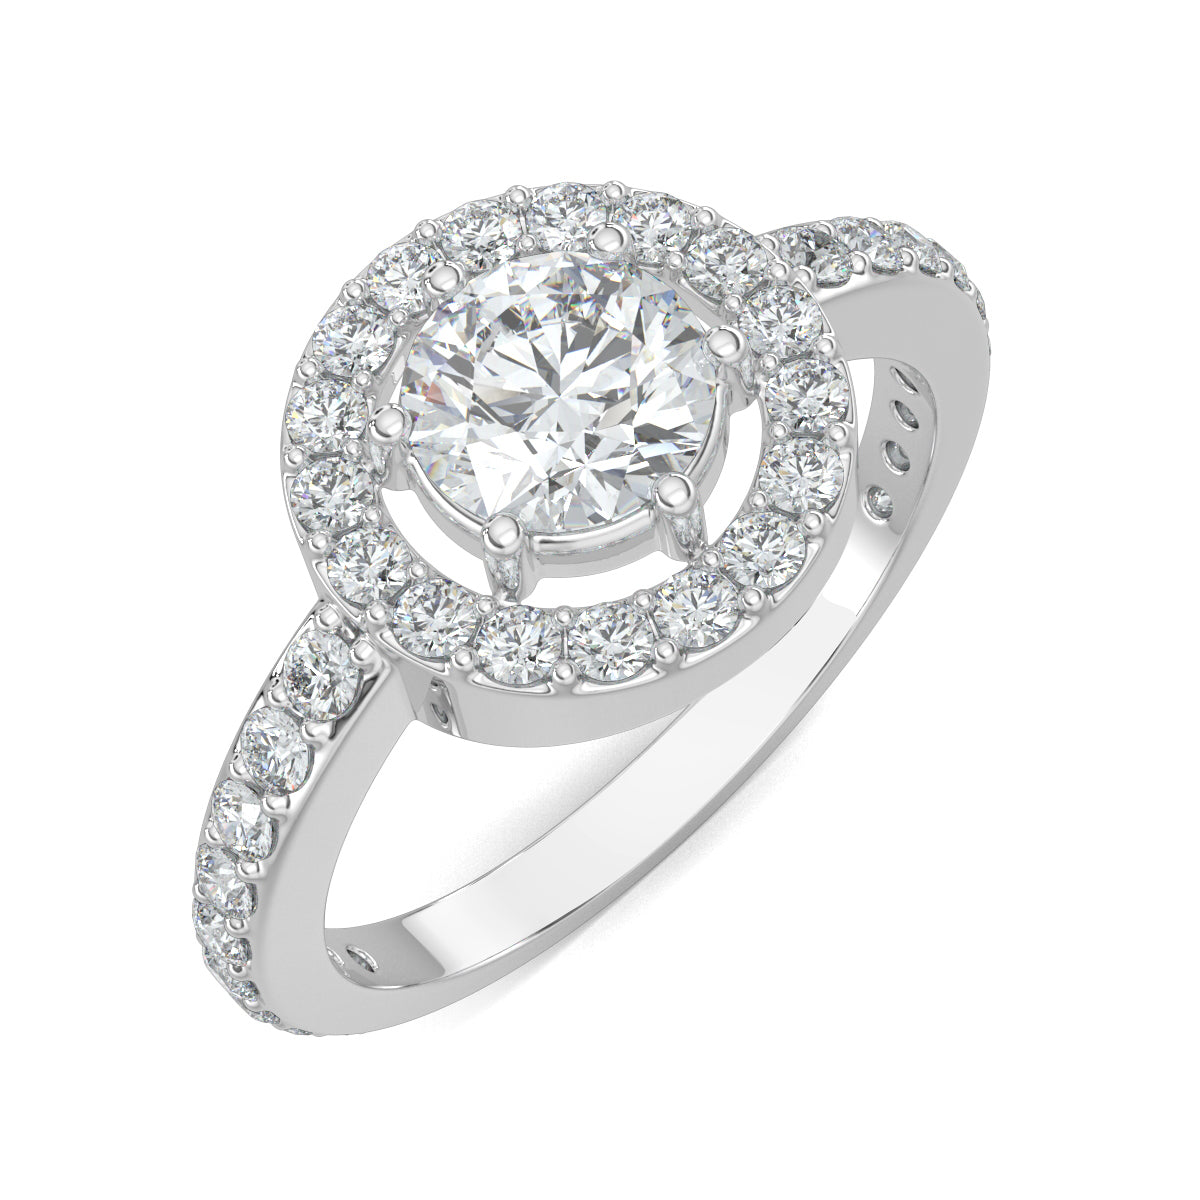 White Gold, Diamond Ring, natural diamond ring, lab-grown diamond ring, Everyday diamond ring, round diamond ring, halo setting, pave-set diamonds, elegant diamond ring, classic jewelry